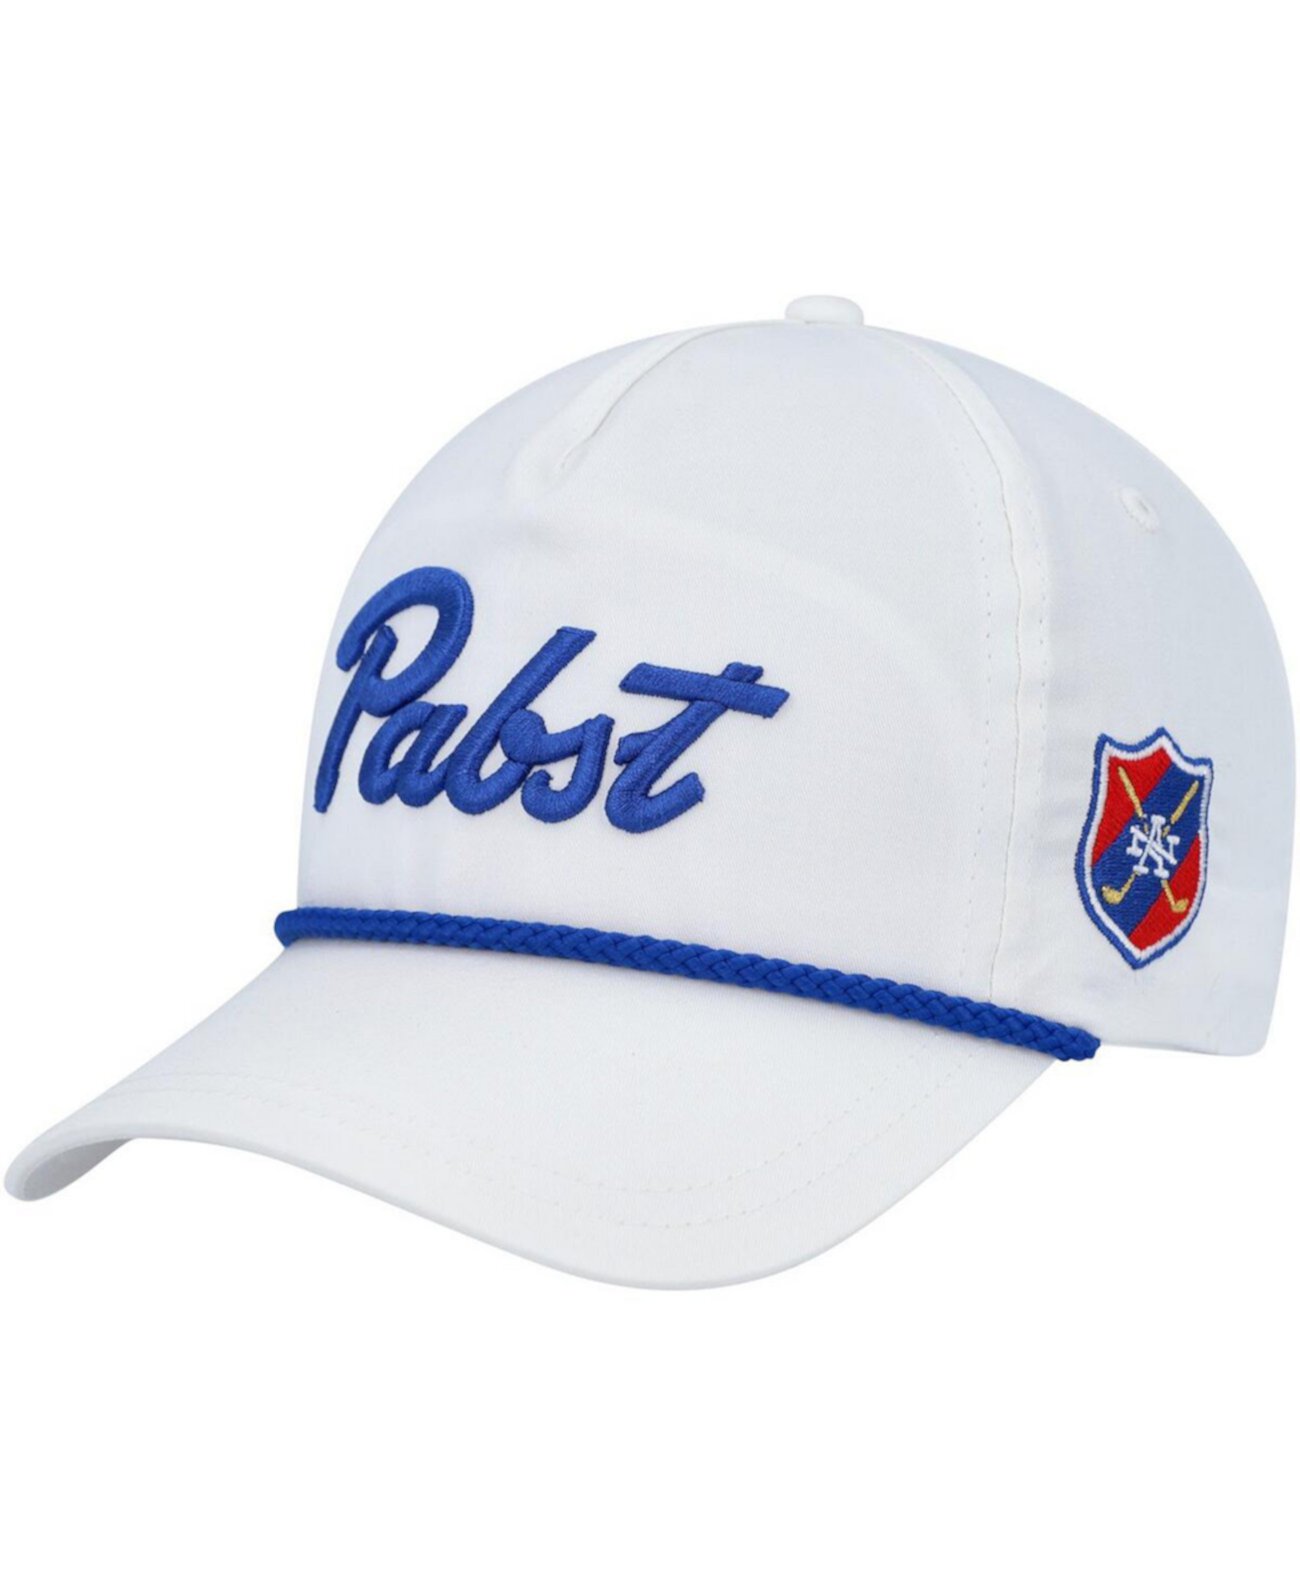 Мужская белая шляпа Snapback с синей лентой Pabst American Needle